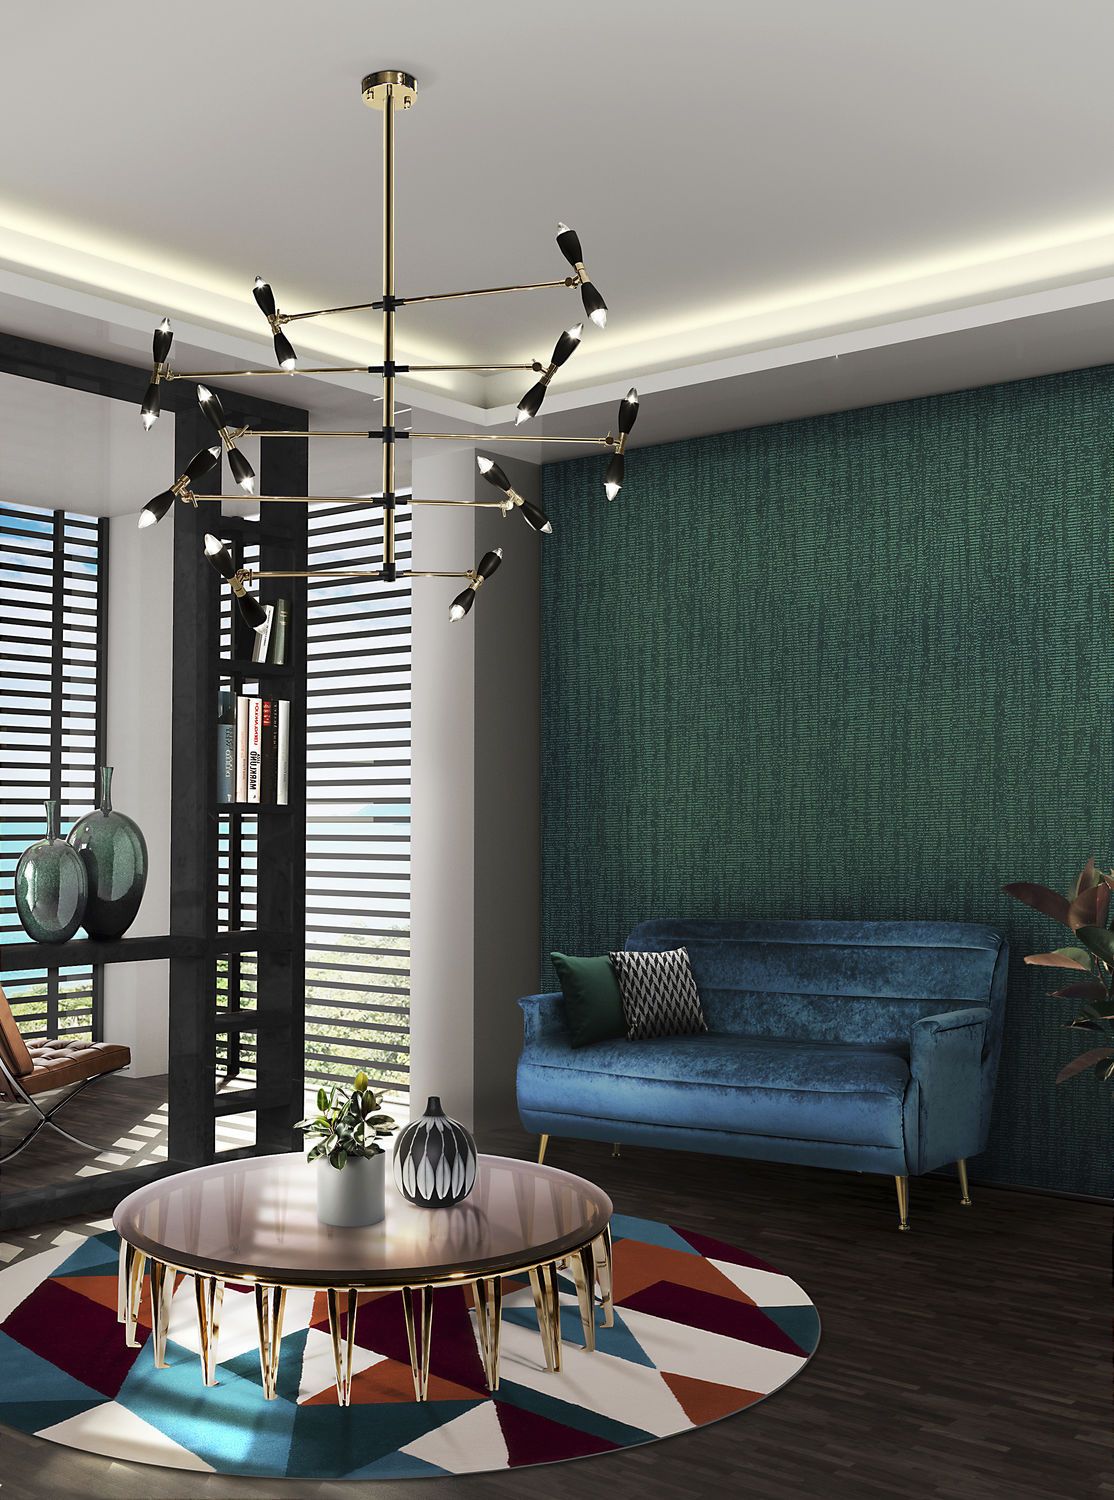 Bardot Sofa-Essential Home-Contract Furniture Store